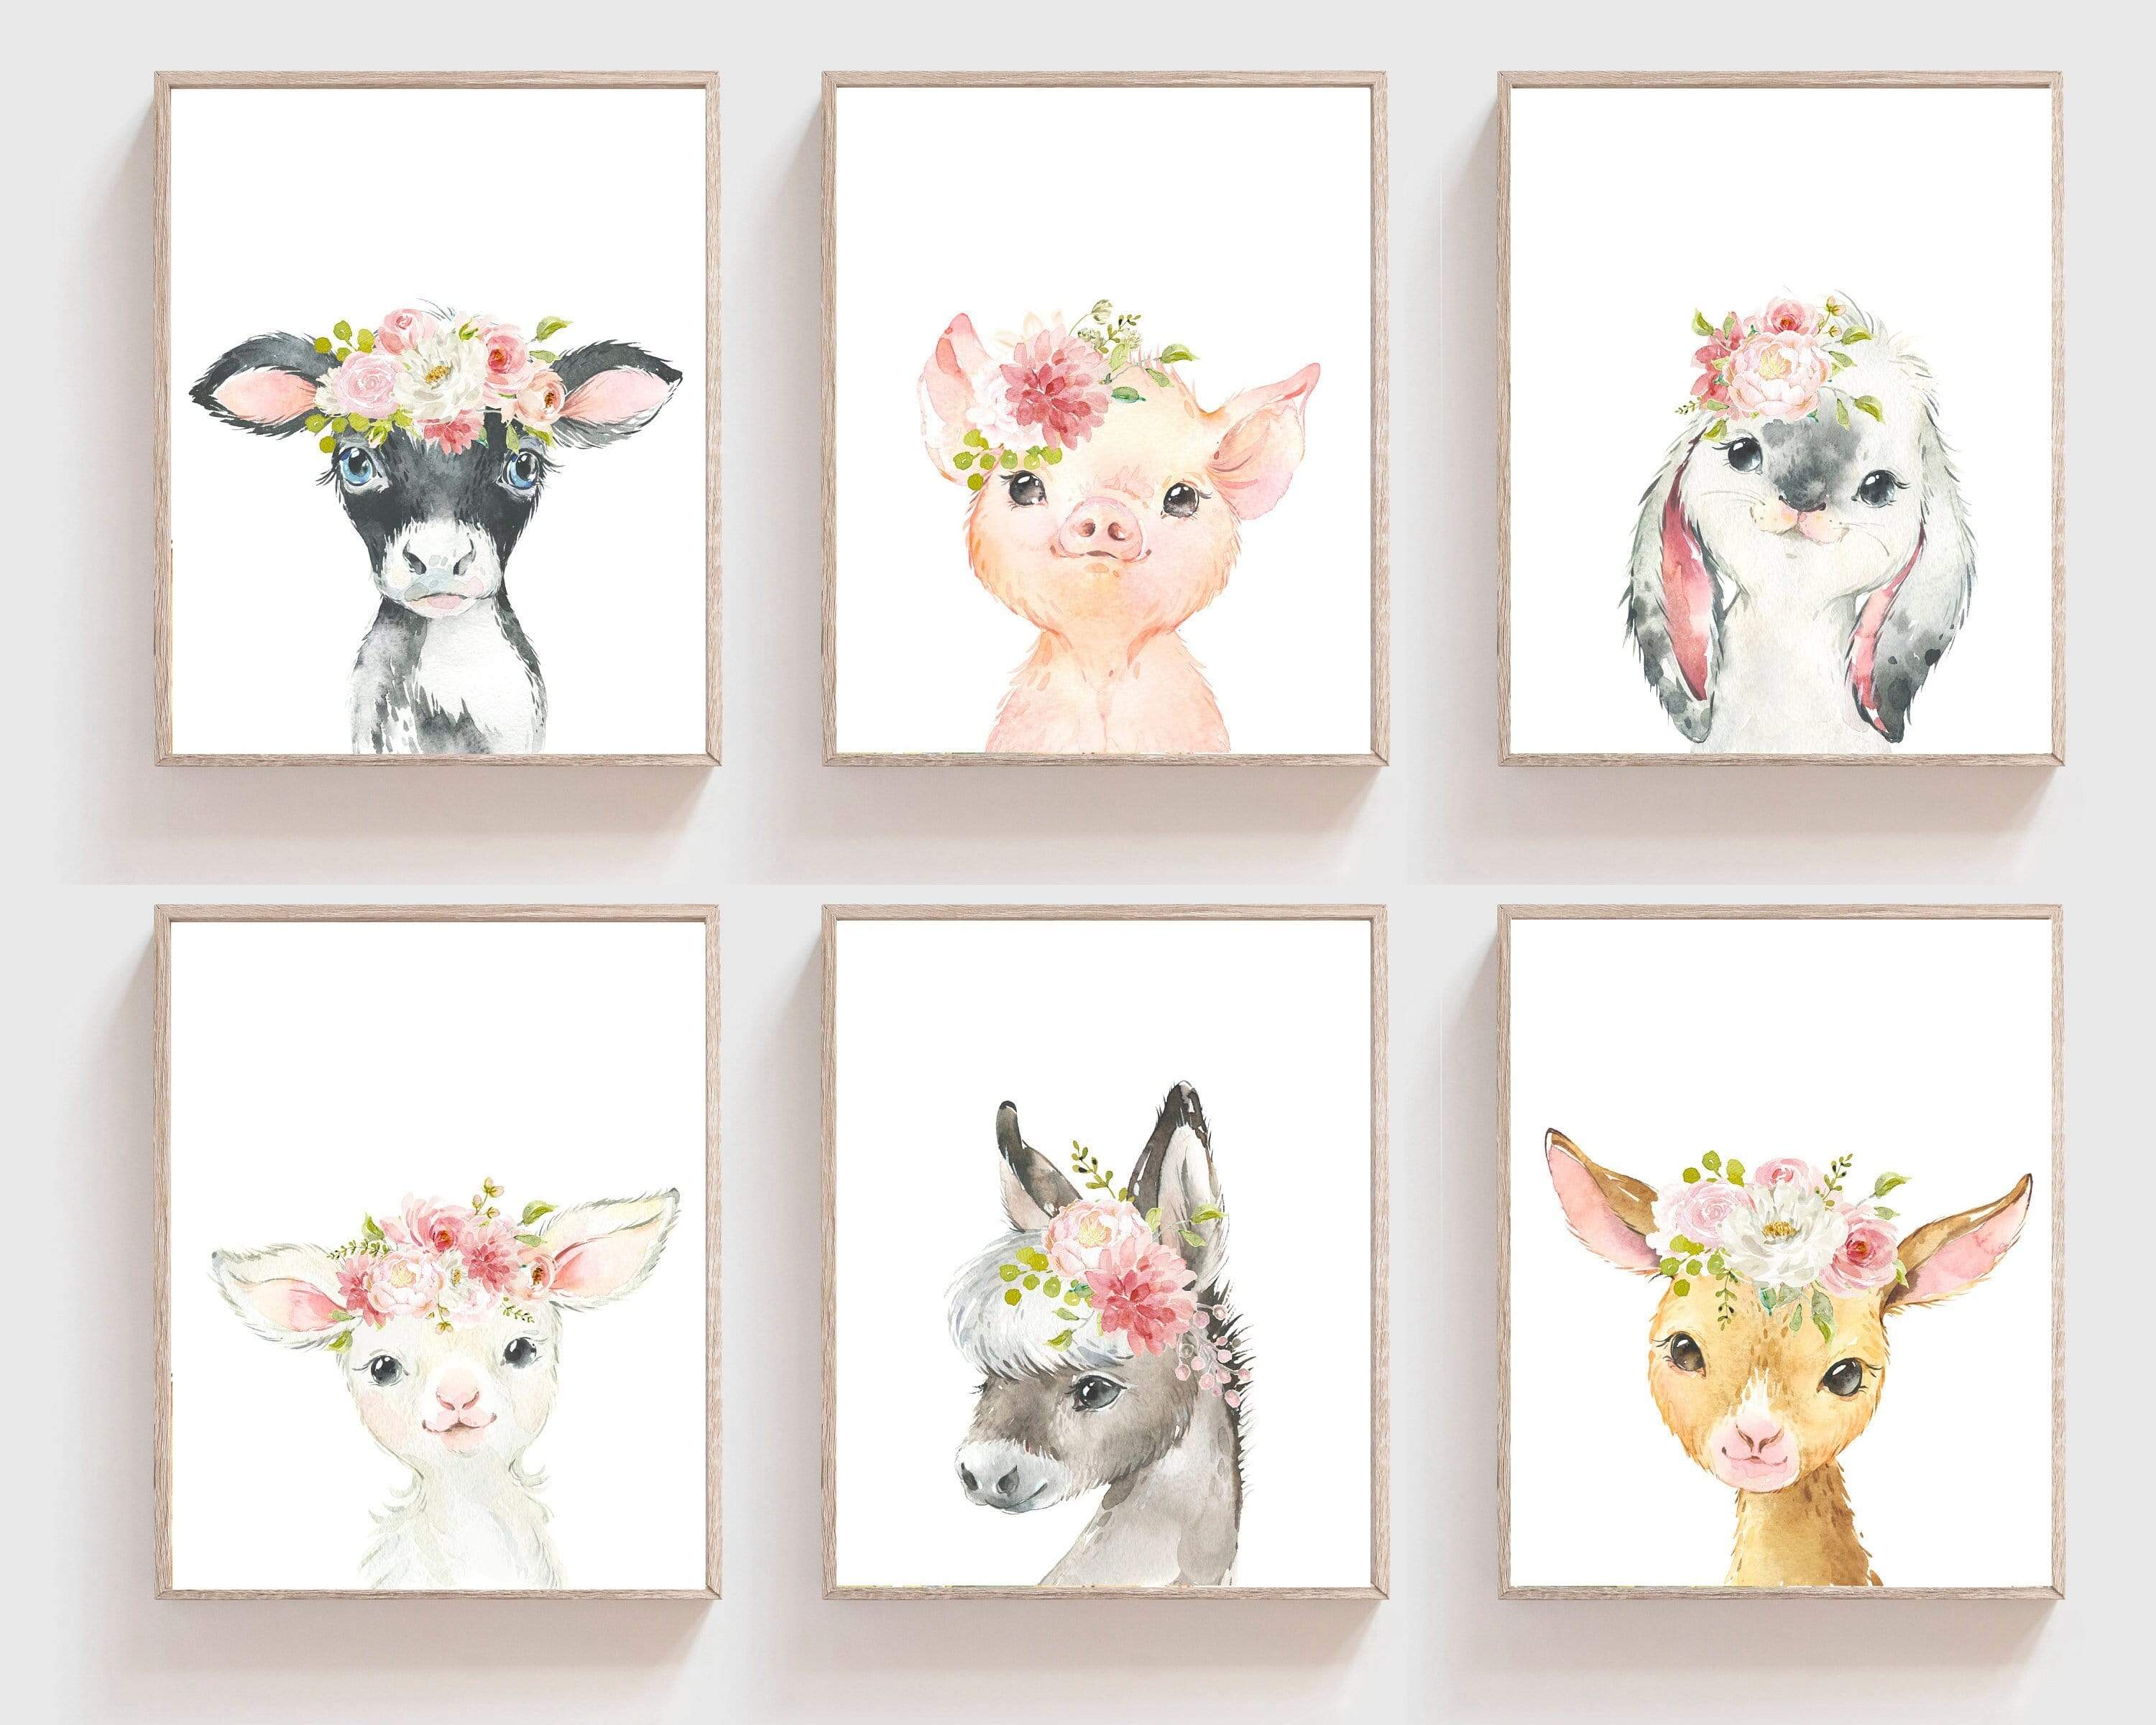 Girl farm animal nursery - Farm nursery decor - Farm animal prints - Pink blush flowers - Printable animal art - Flower crown animals nursery art print baby nursery bedroom decor